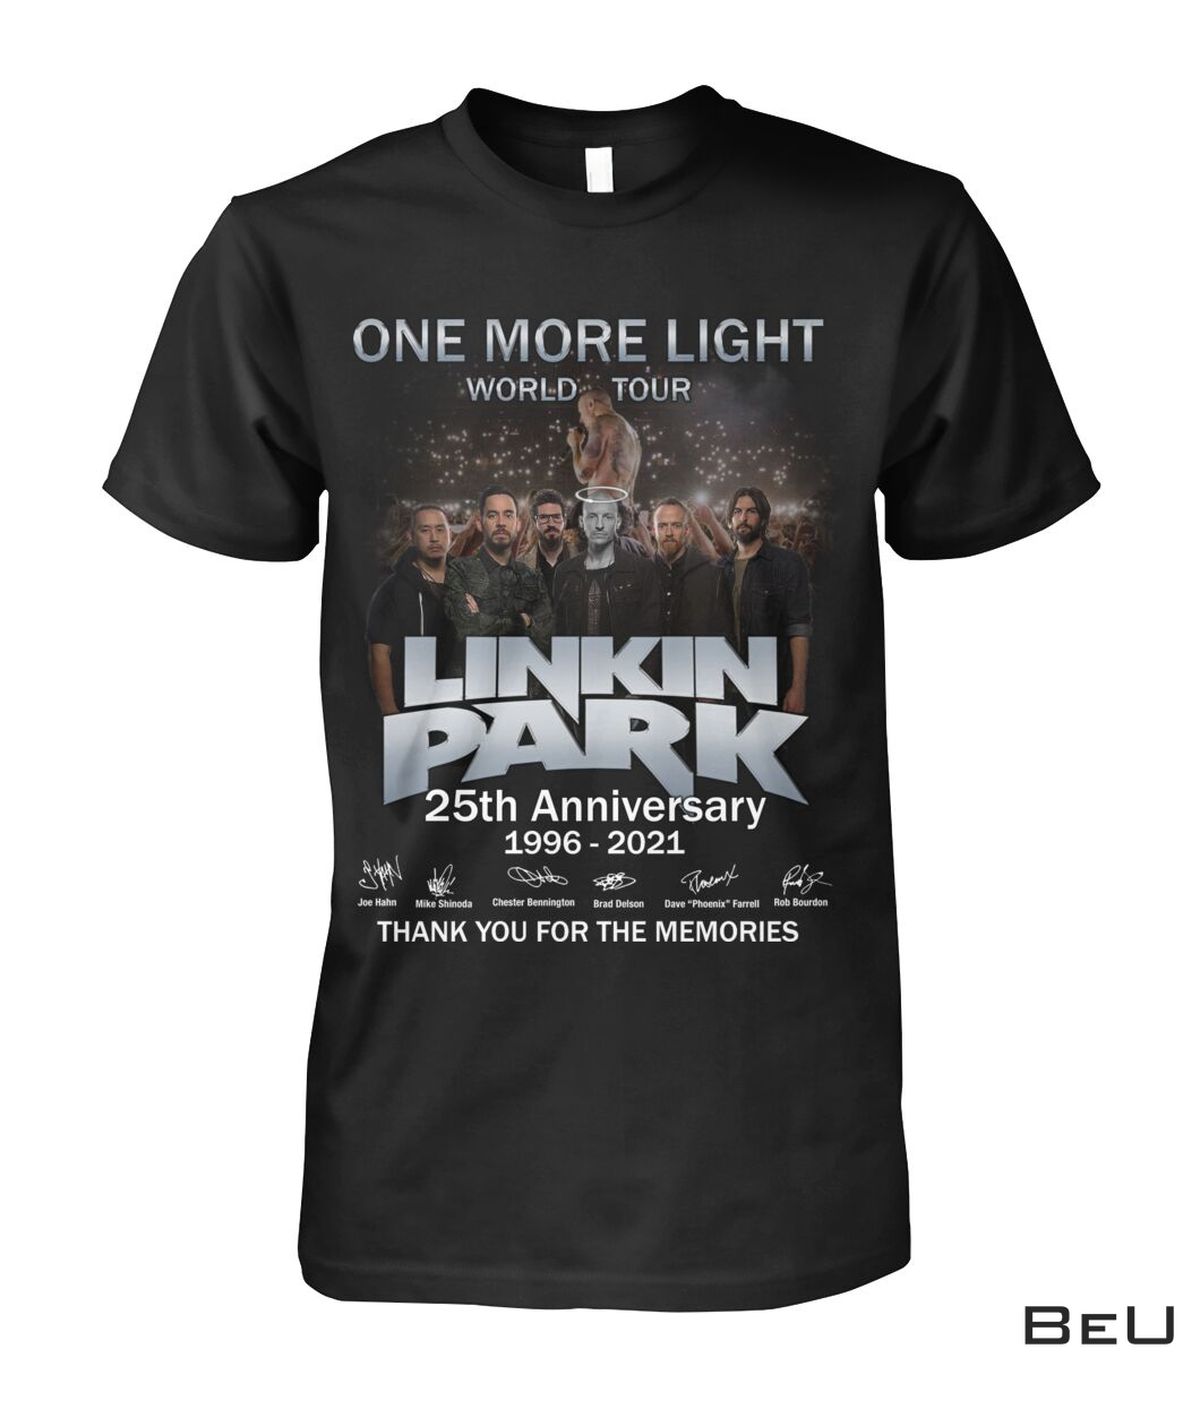 One More Light World Tour Linkin Park 25th Anniversary Shirt